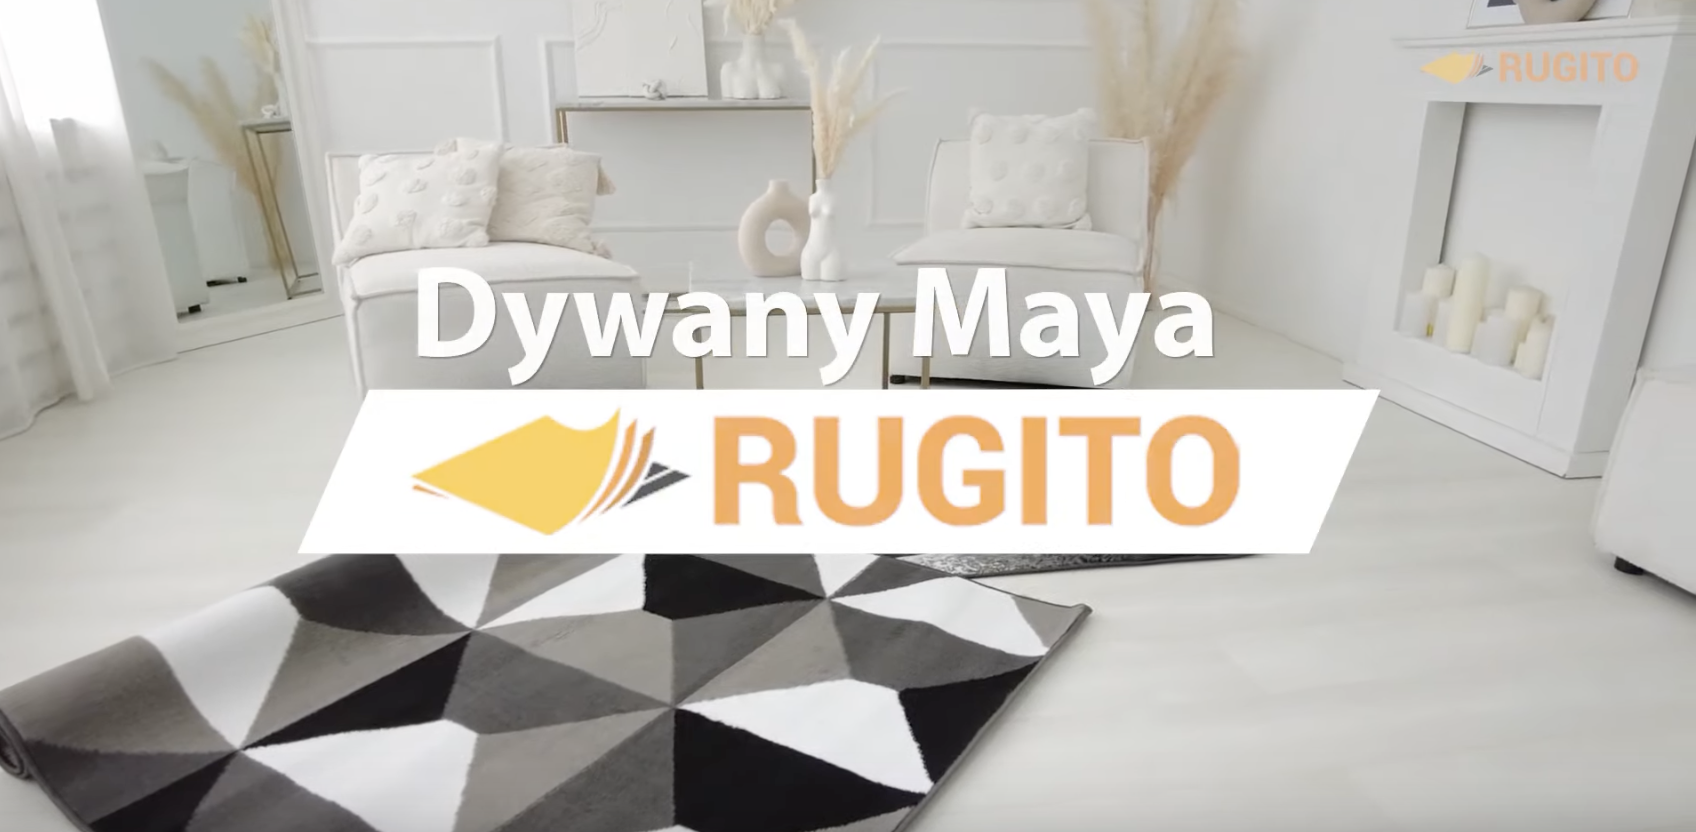 Dywany Maya - rugito.pl - Rugito Radosław Bartosik